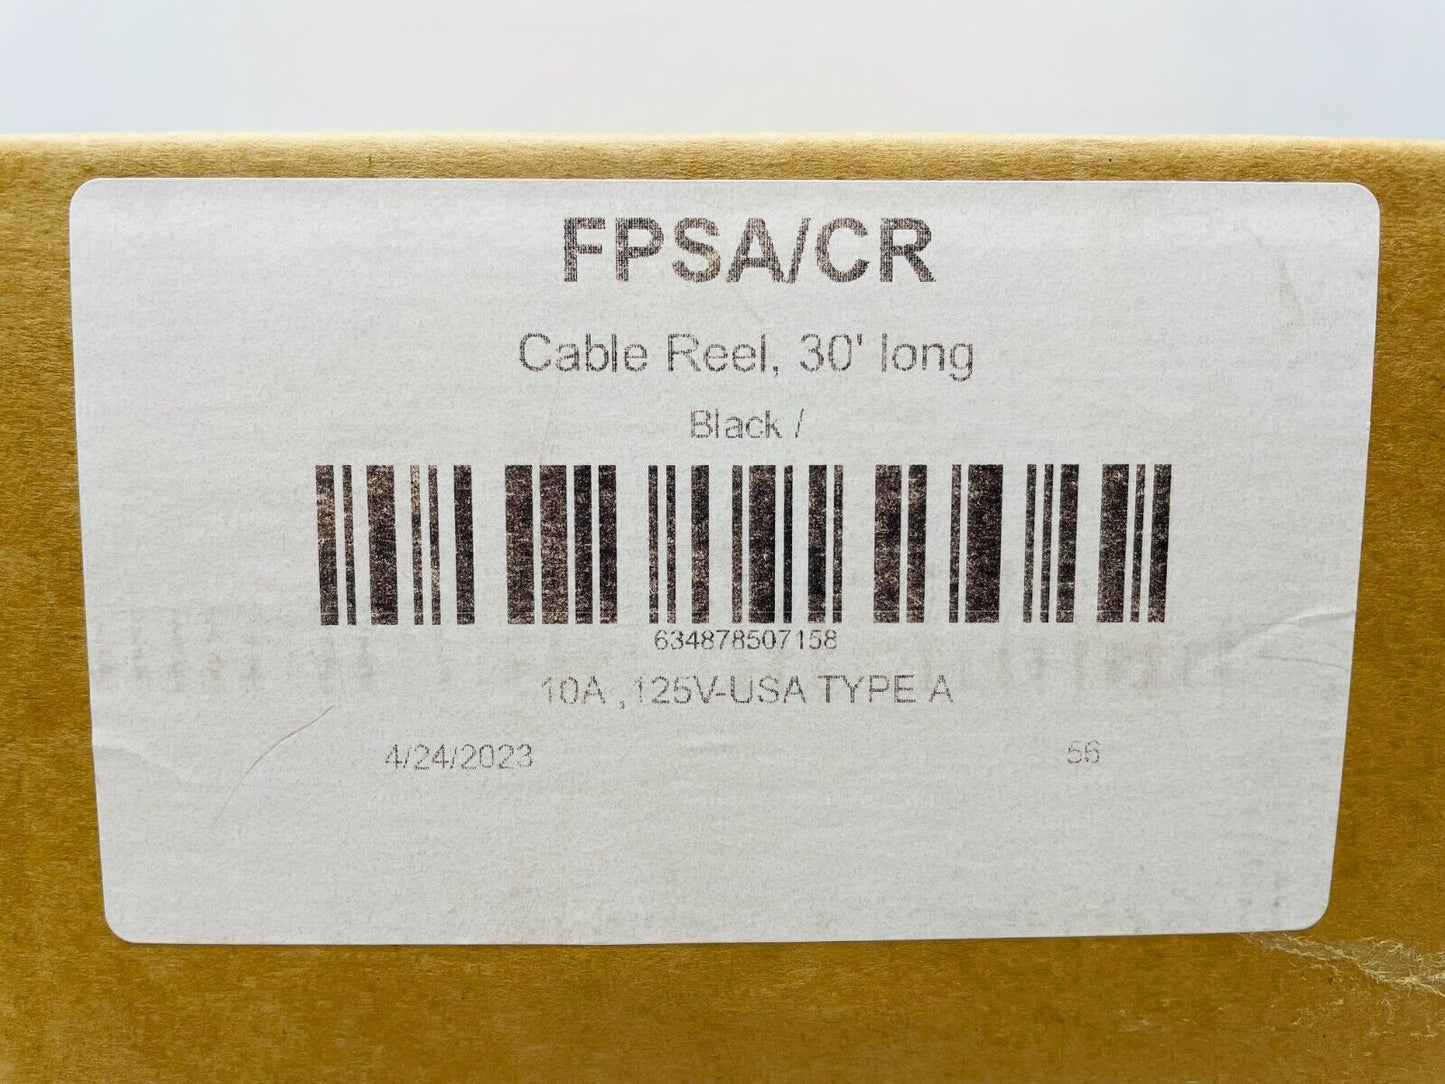 Salamander FPSA/CR Designs Retractable Power Cable Reel